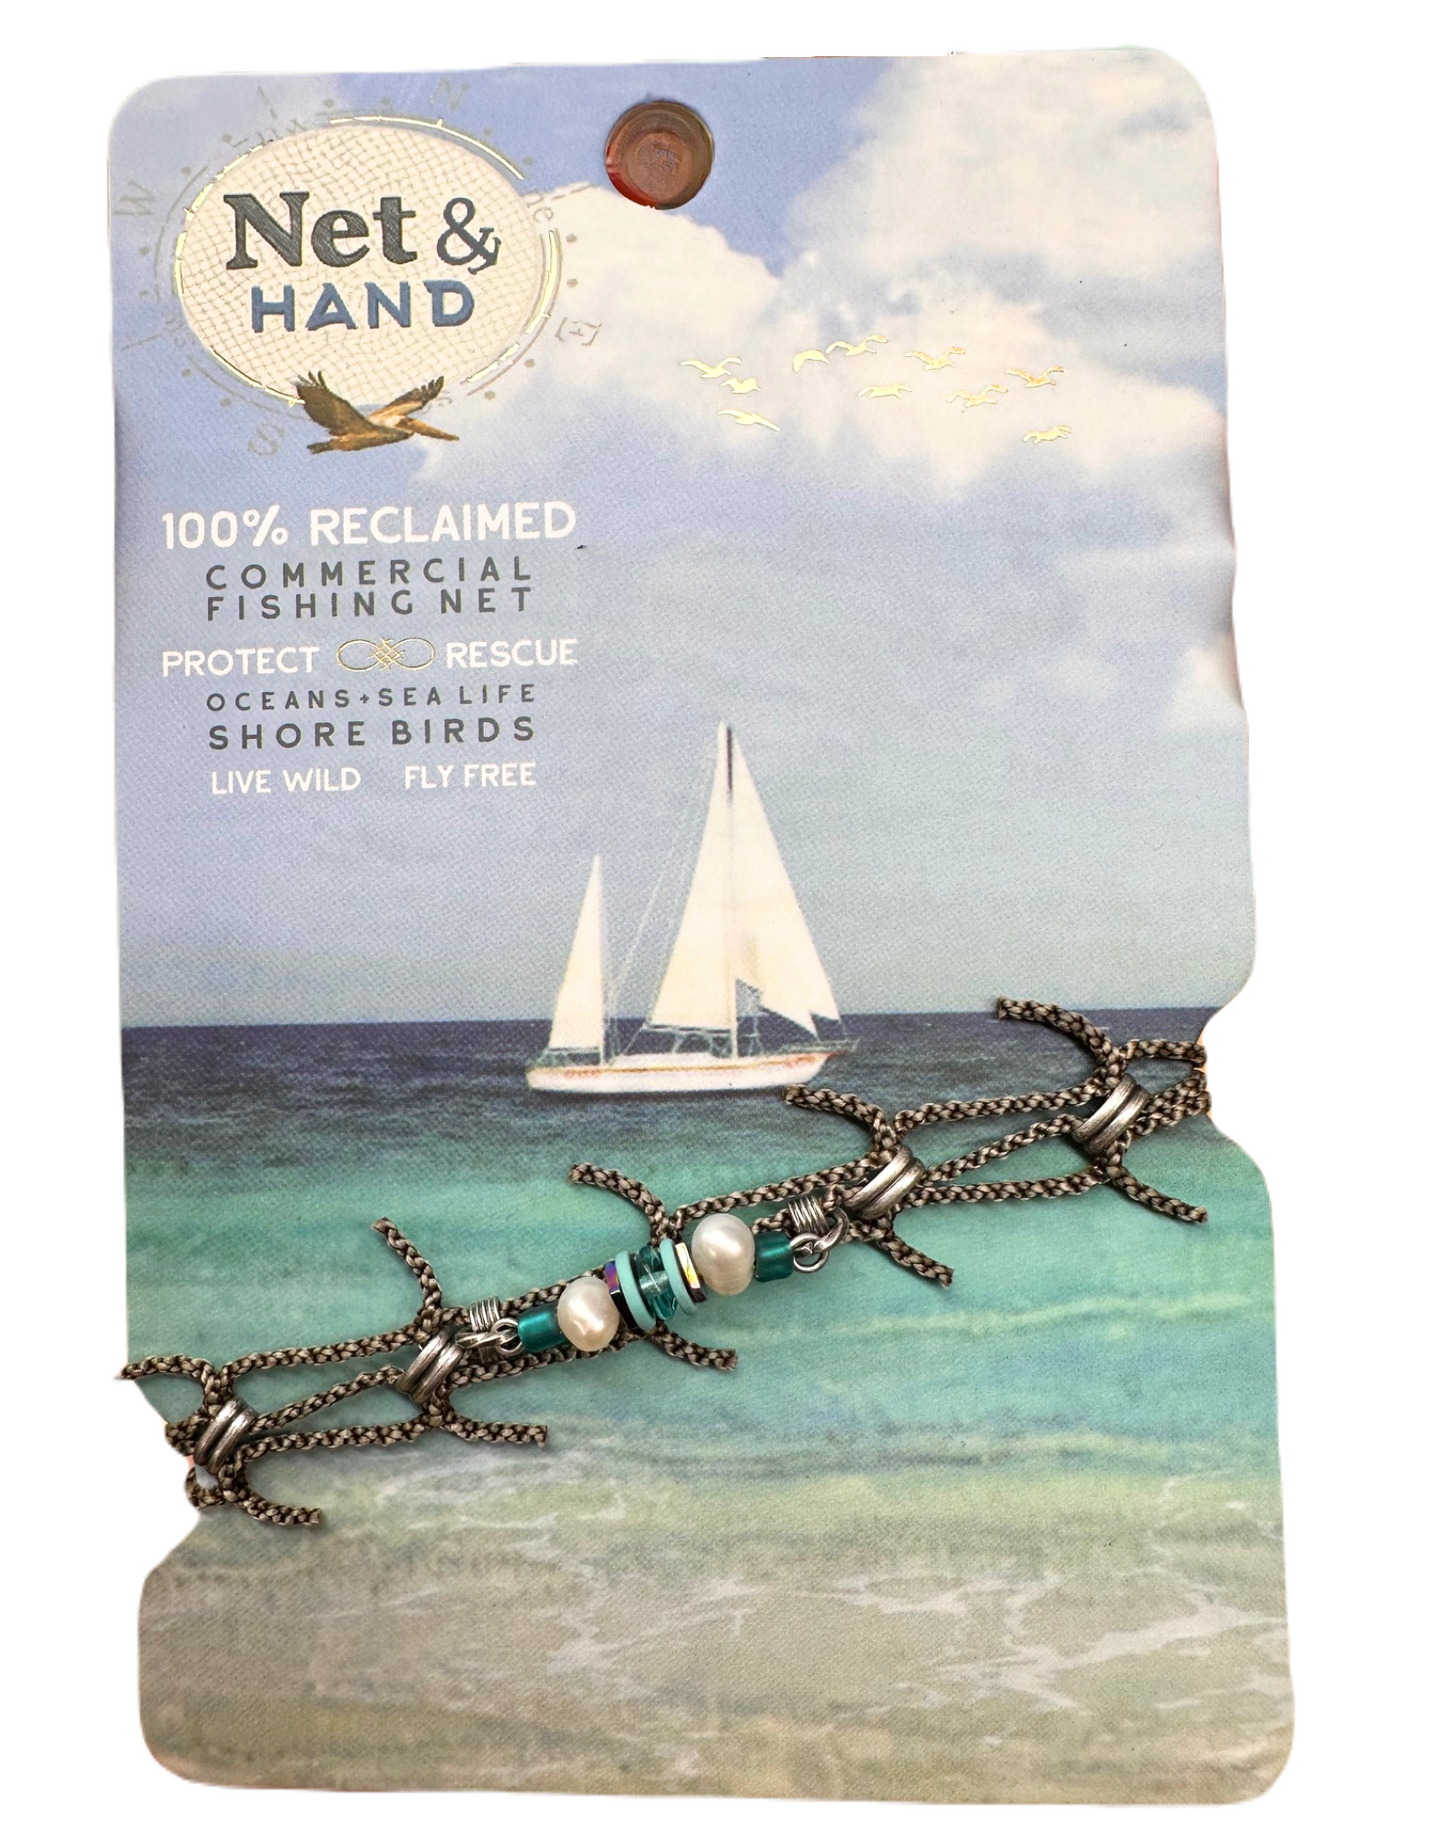 Net & Hand Reclaimed Fishing Net Bracelet - Teal and Pearl Design